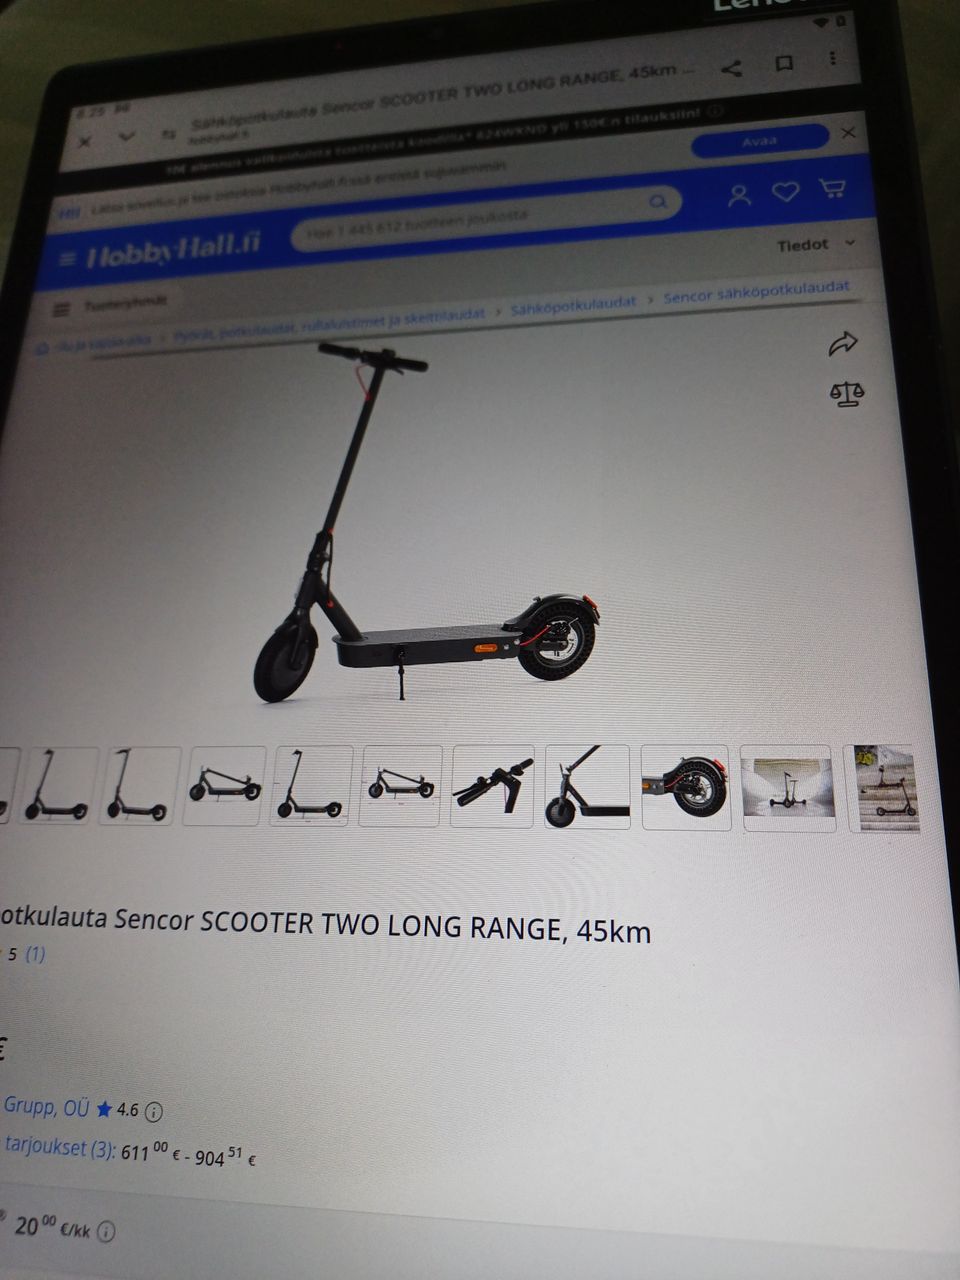 Sencor scooter tuo long range